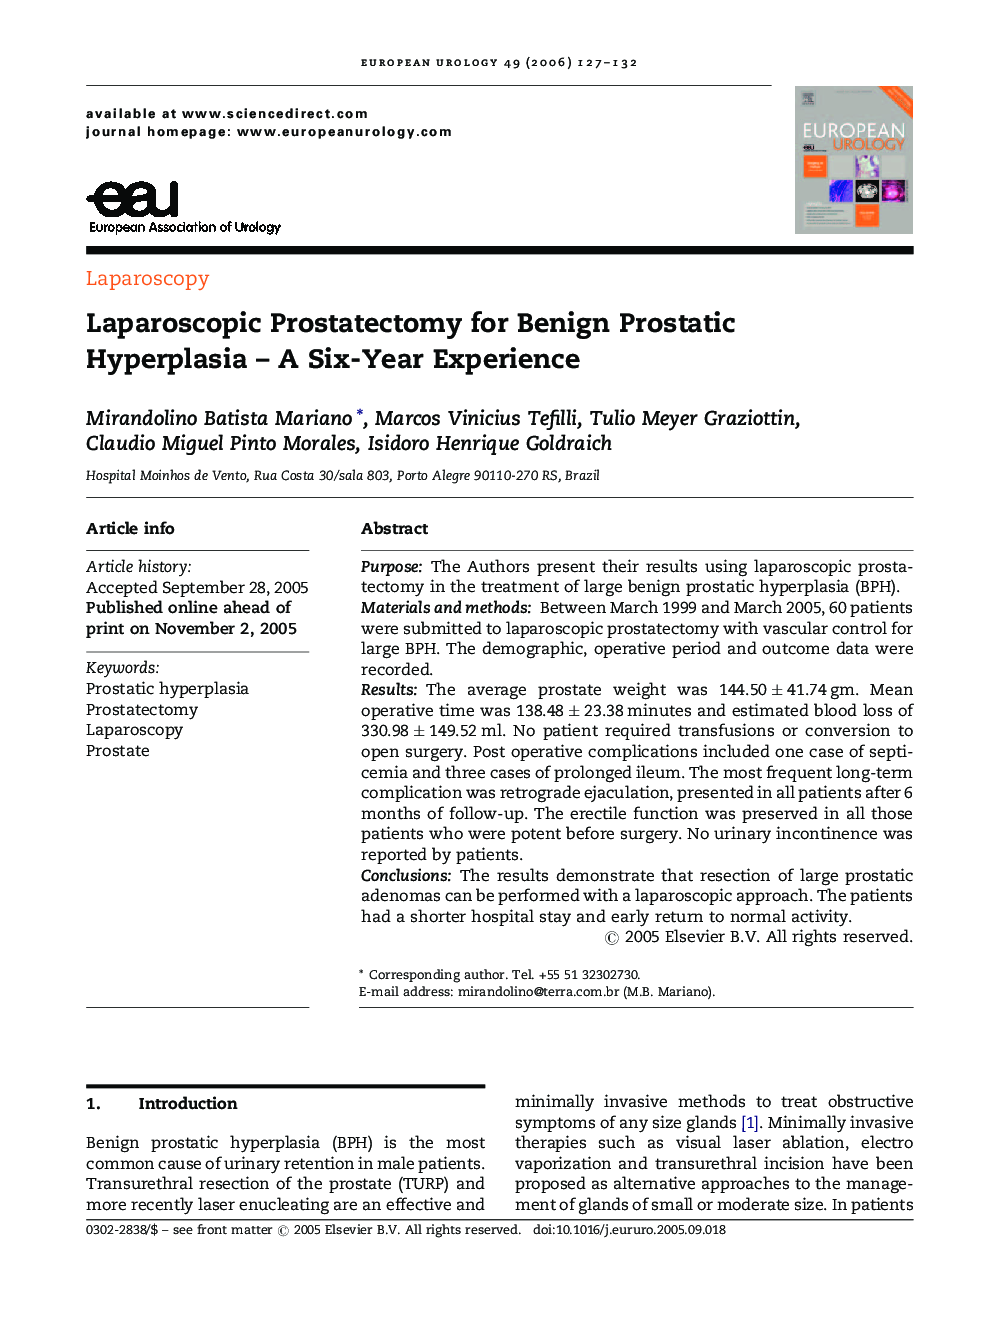 Laparoscopic Prostatectomy for Benign Prostatic Hyperplasia – A Six-Year Experience